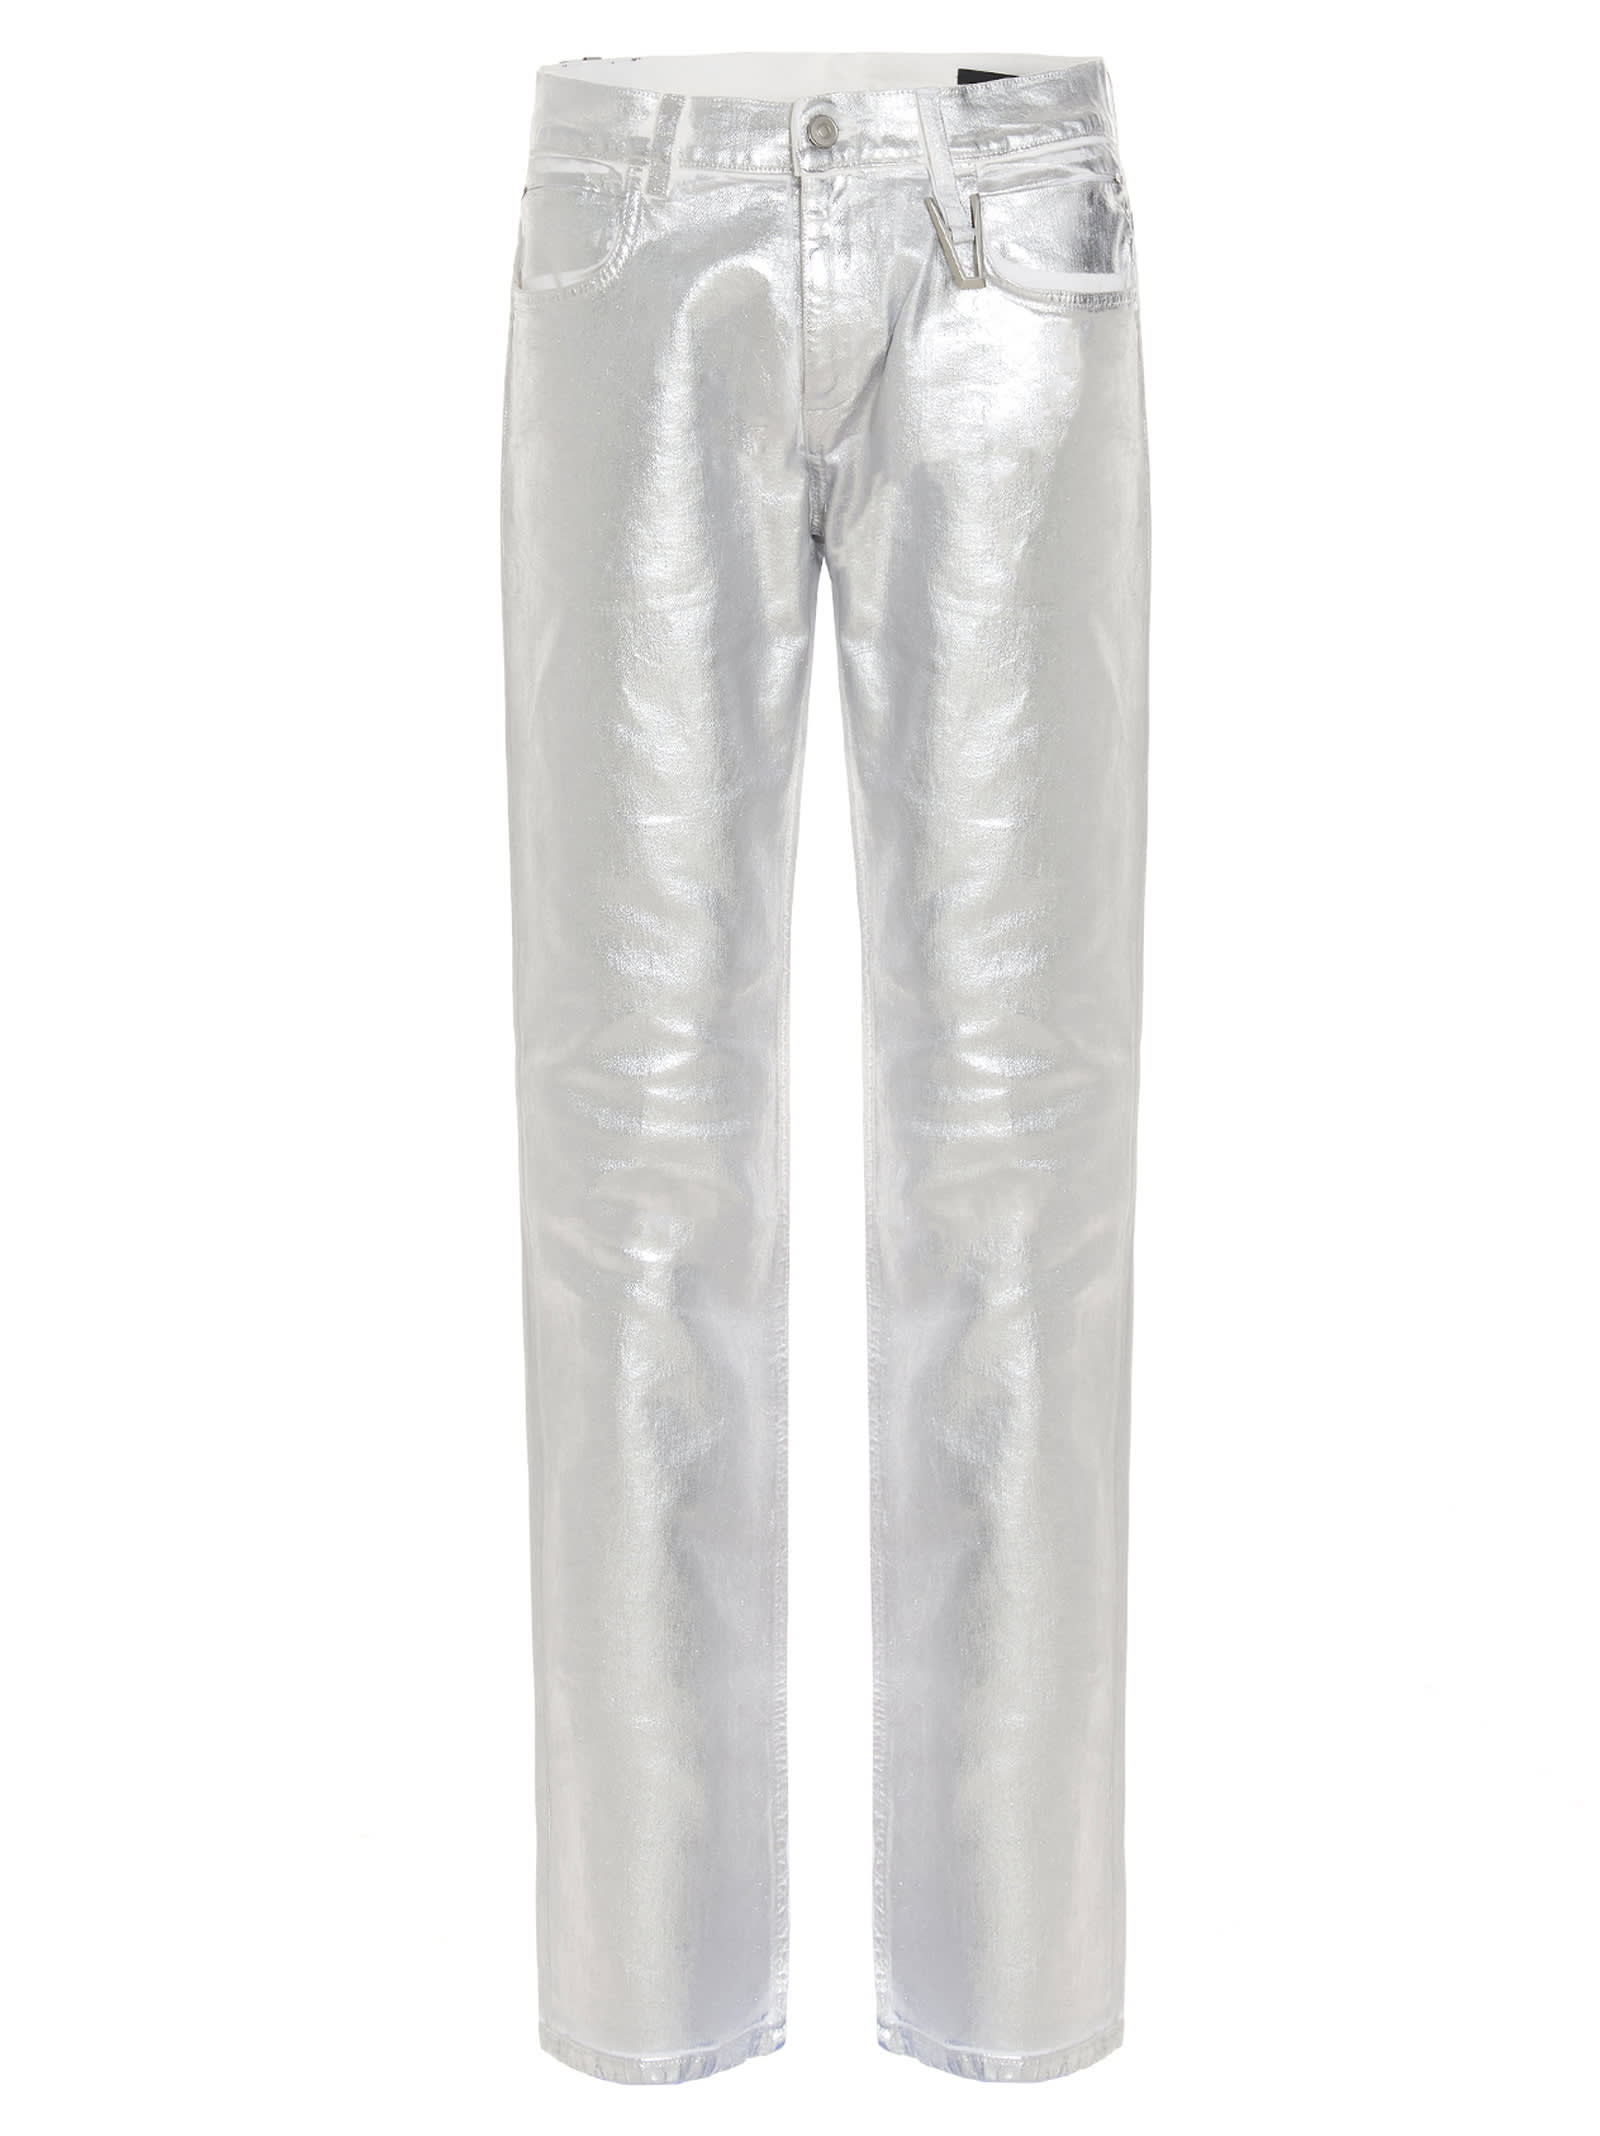 1017 Alyx 9sm foil 6 Pocket Jeans